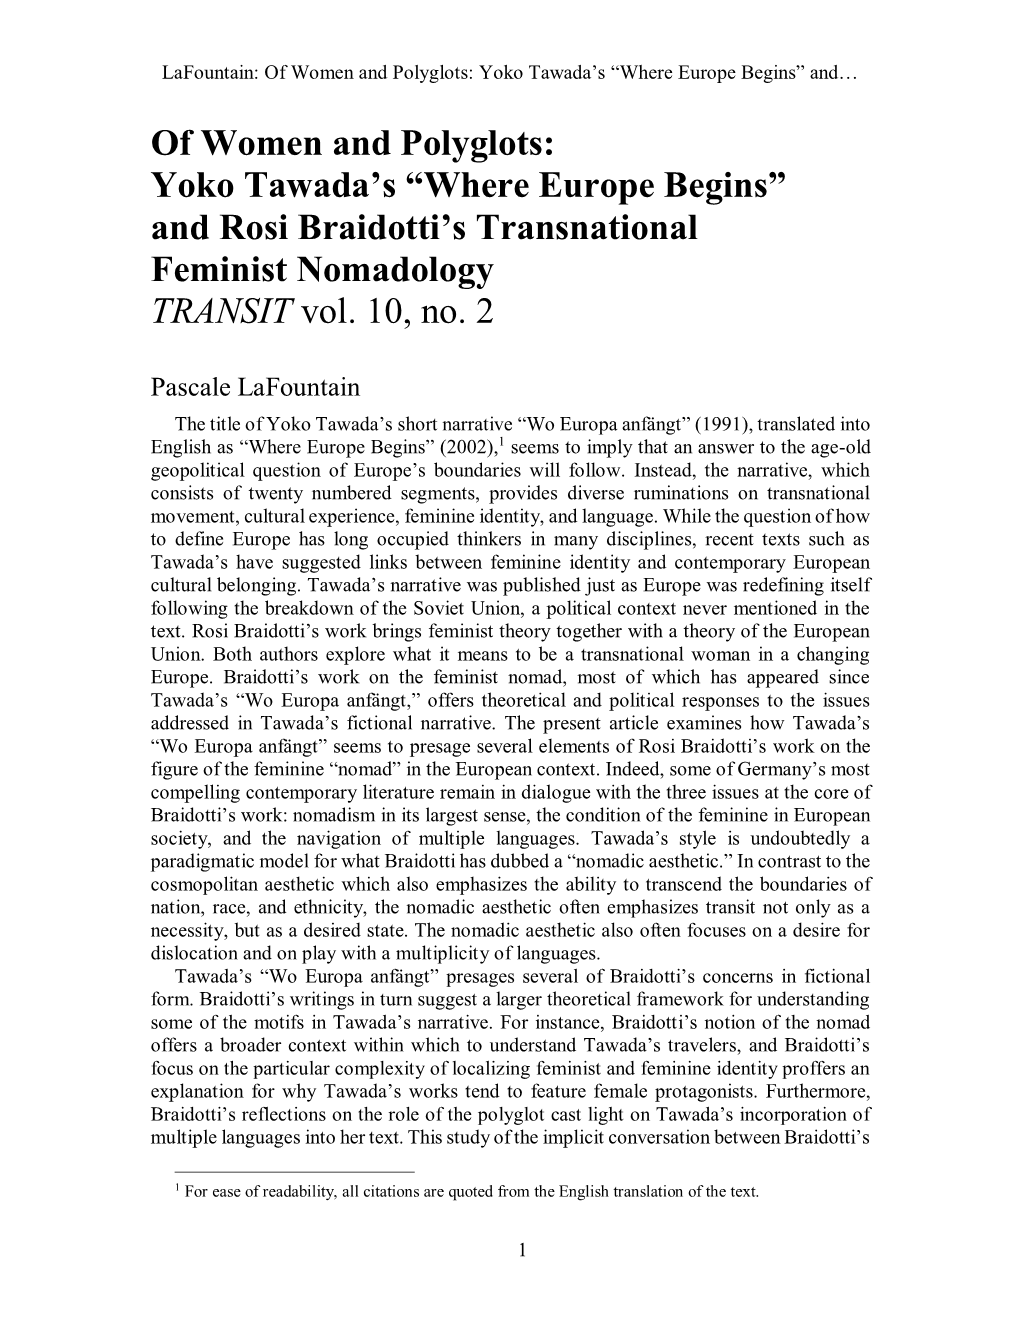 Yoko Tawada's “Where Europe Begins” and Rosi Braidotti's